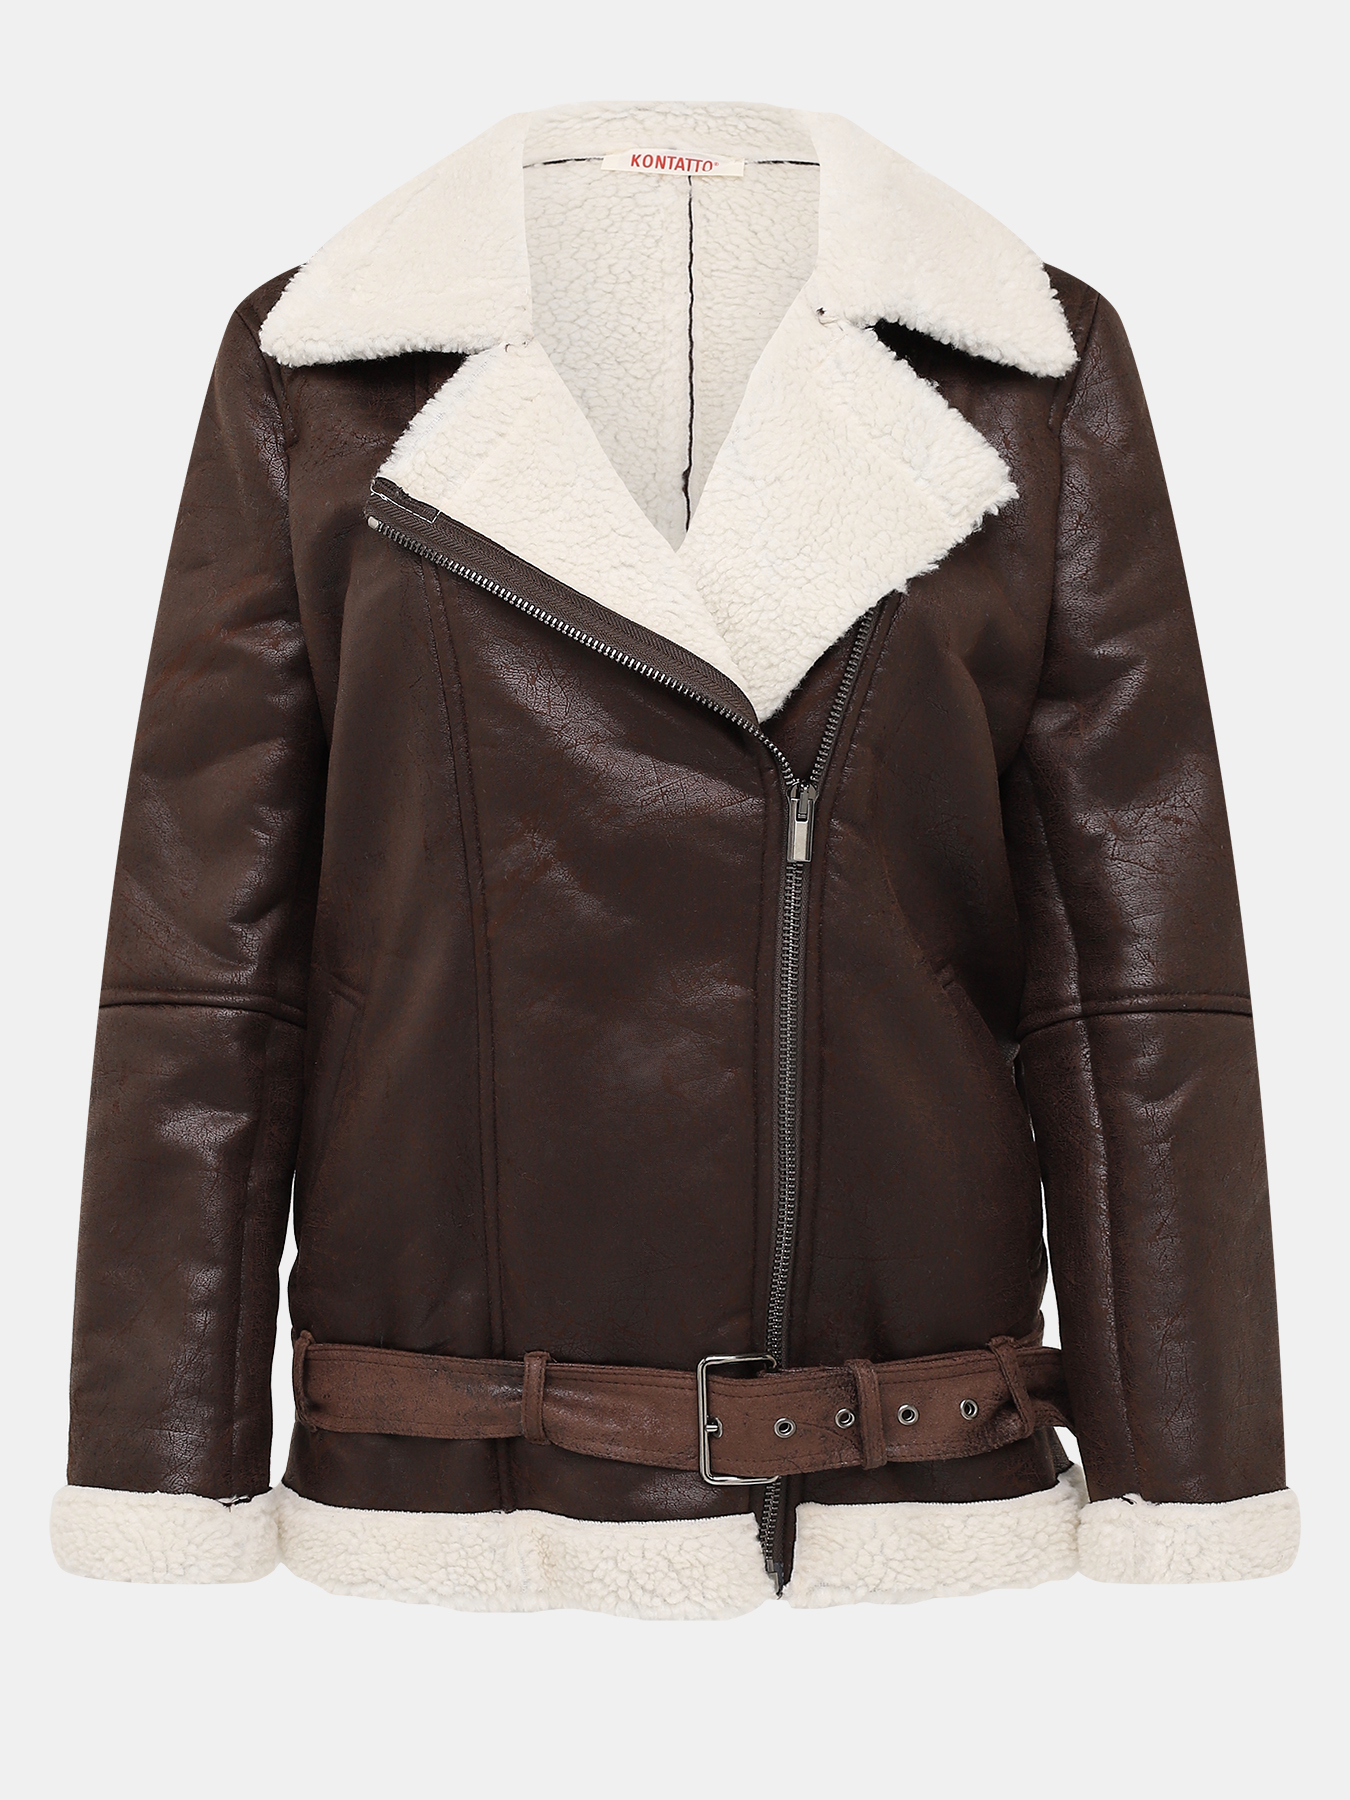 Куртка Kontatto 398322-041, цвет коричневый, размер 40-42